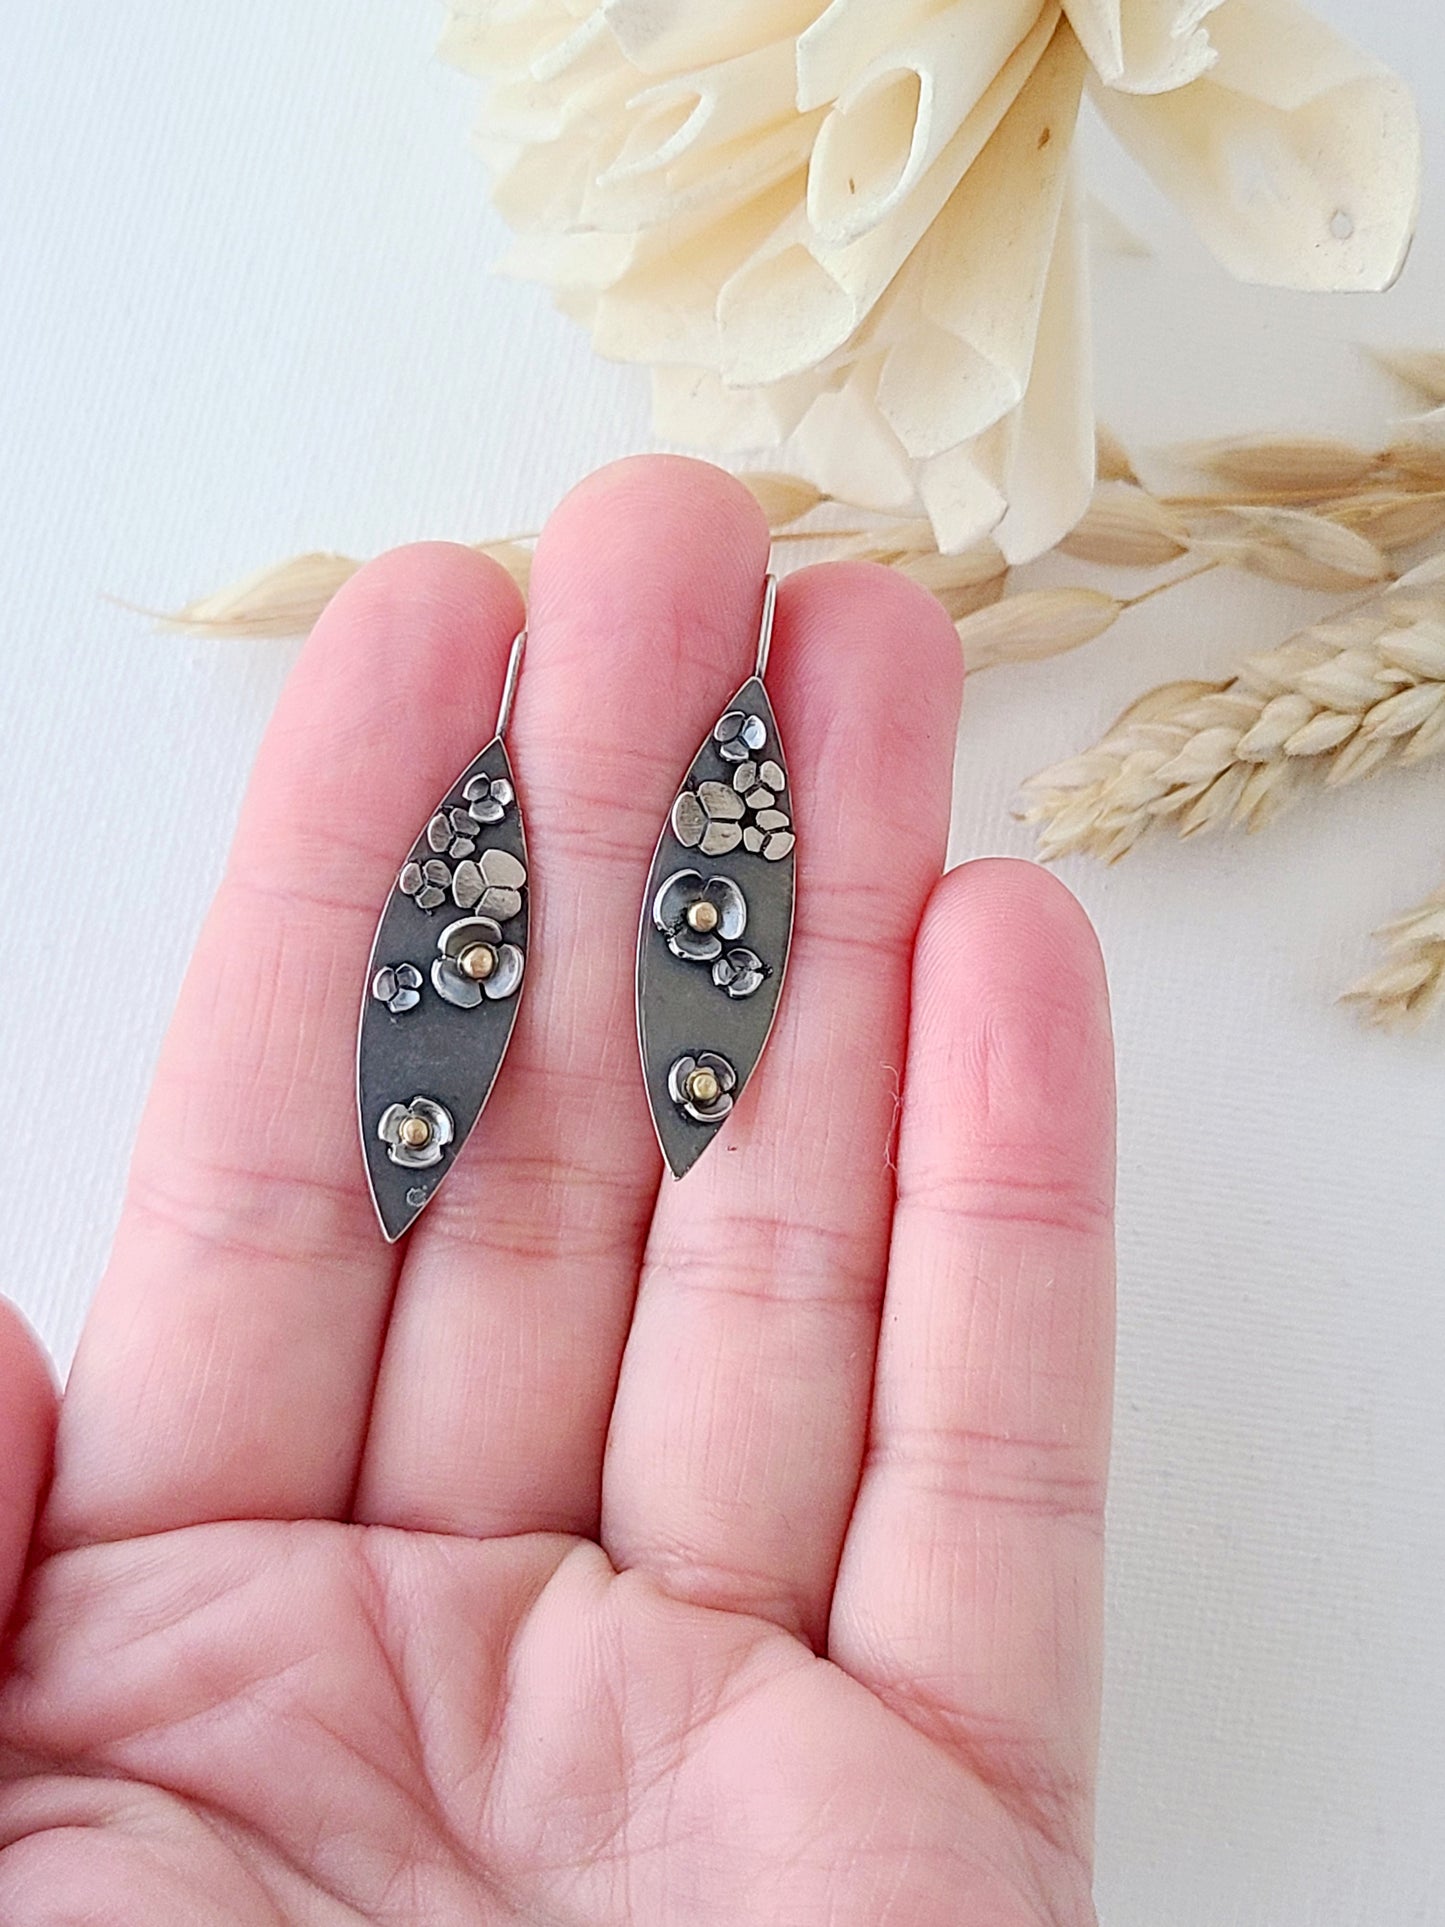 Garland earrings-Long marquise